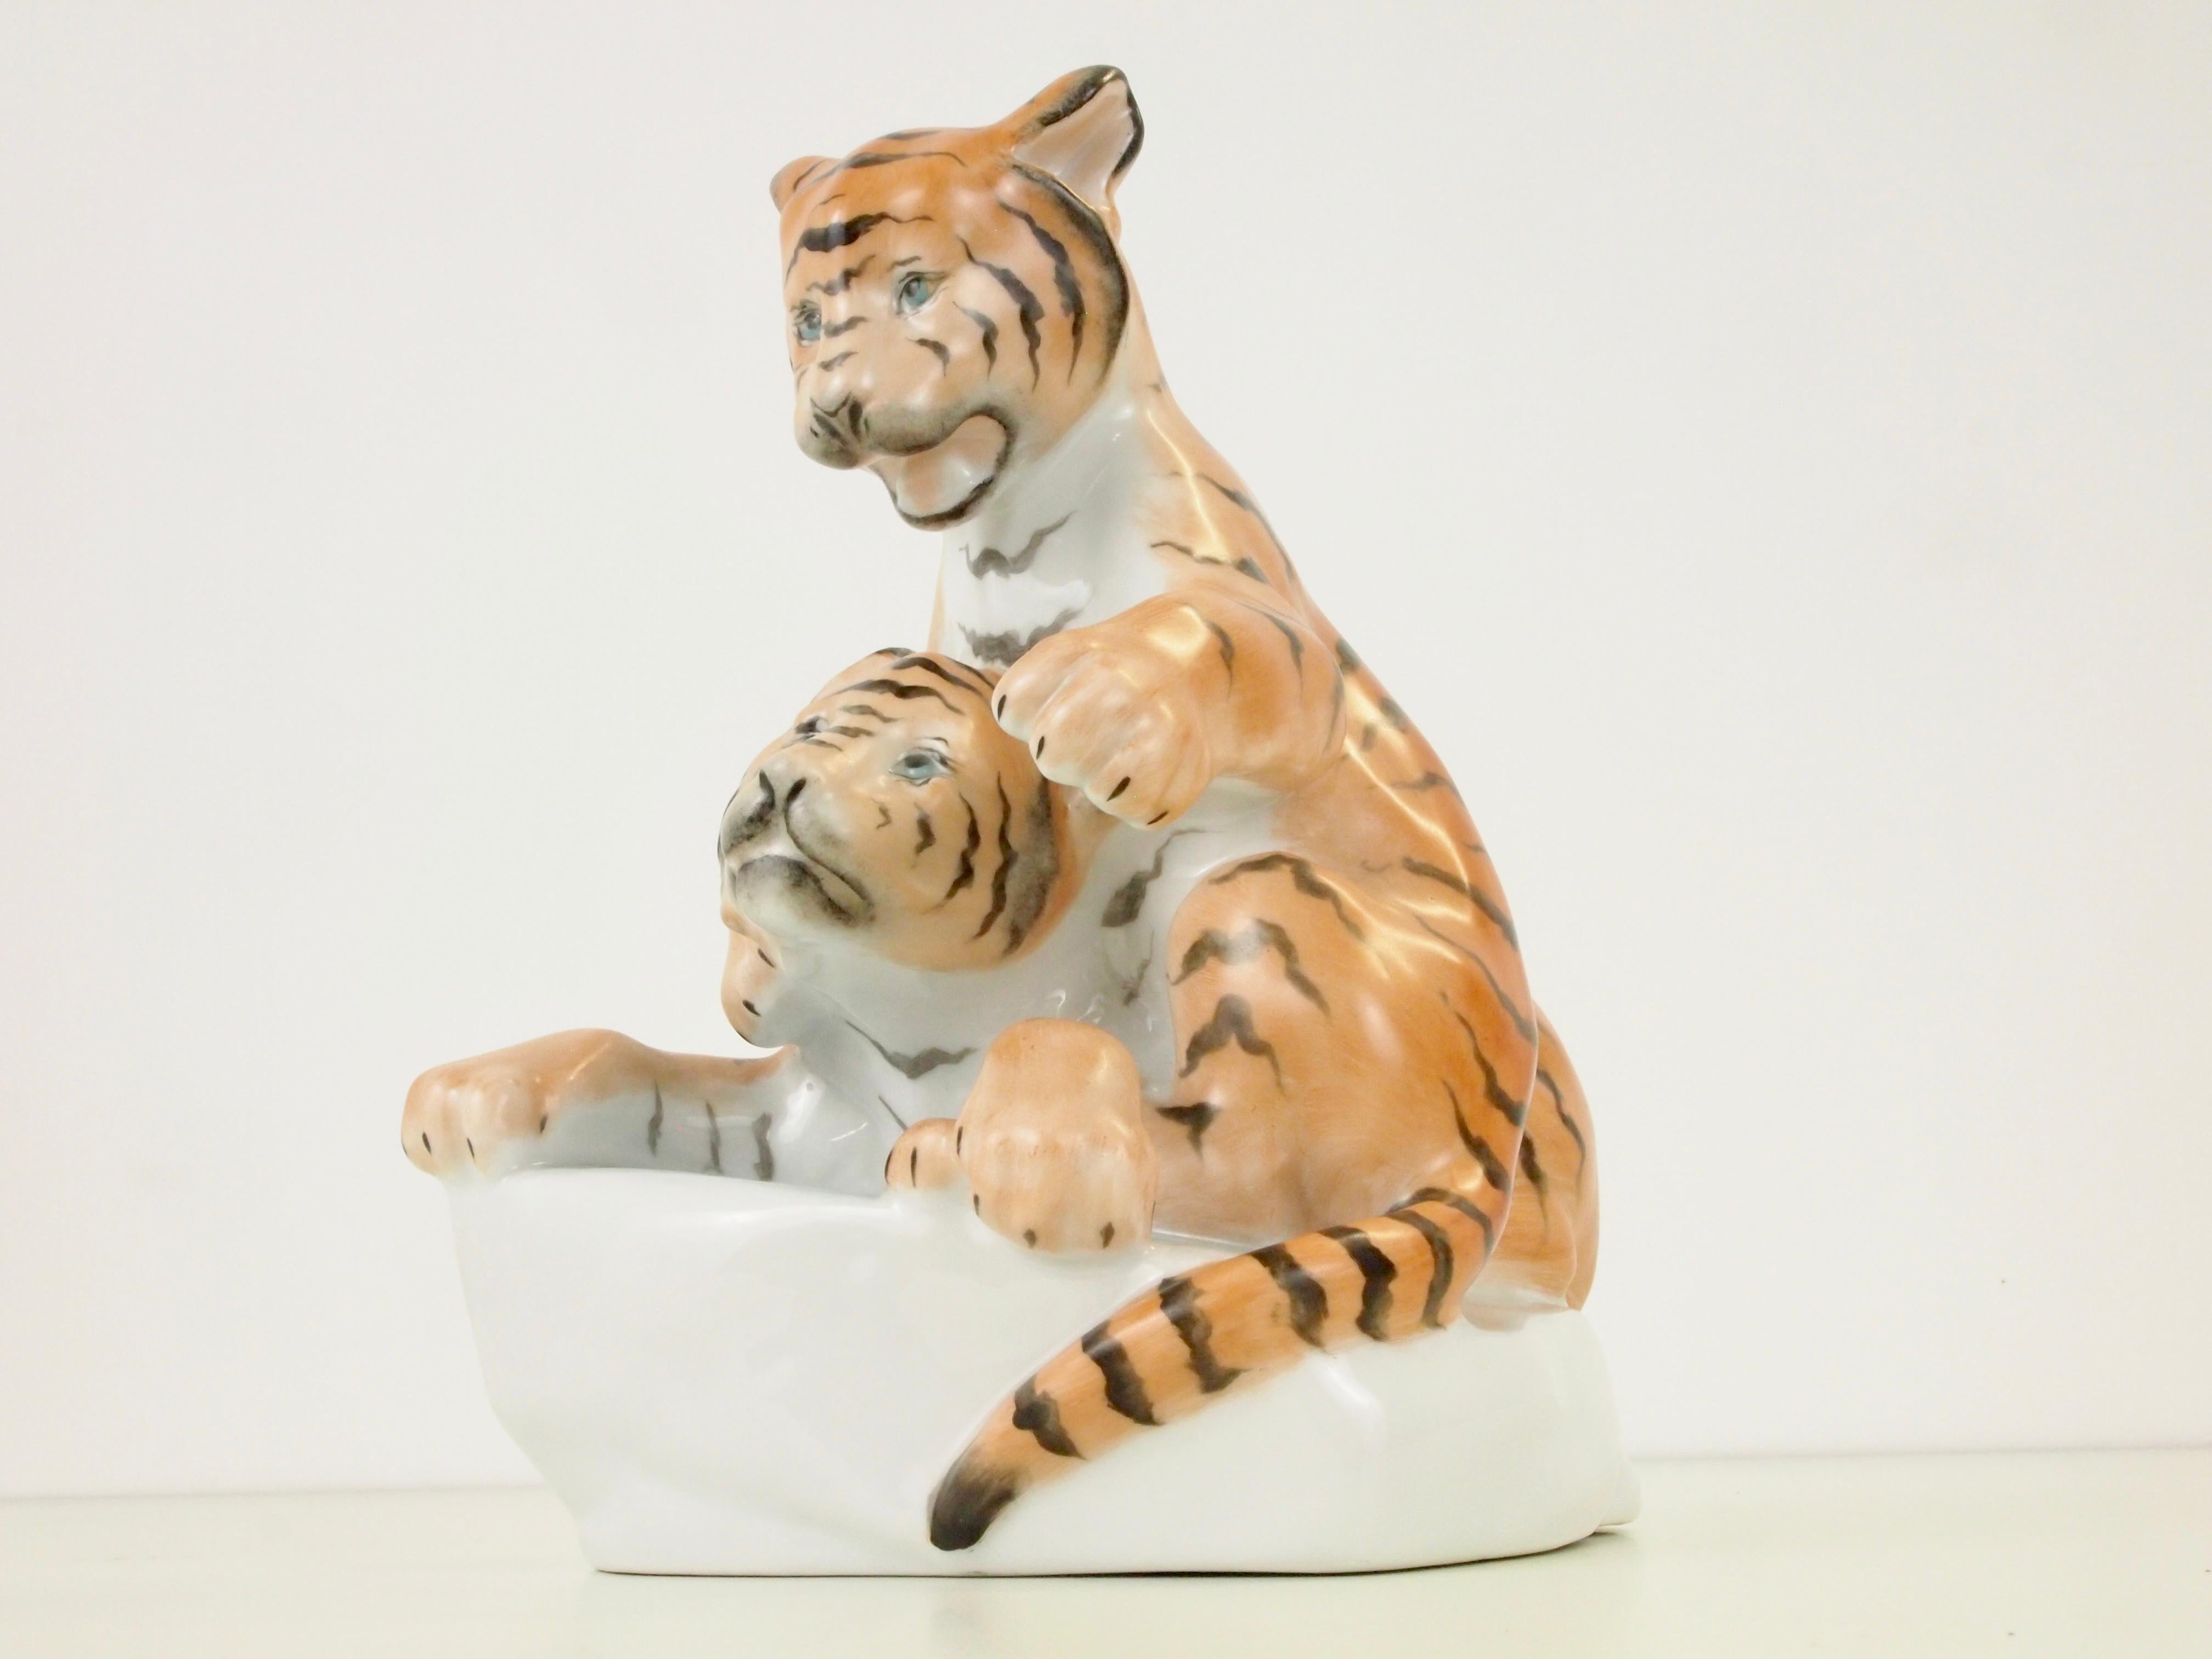 Hungarian Herend Porcelain Figurine Depicting 2 Tiger Cubs For Sale